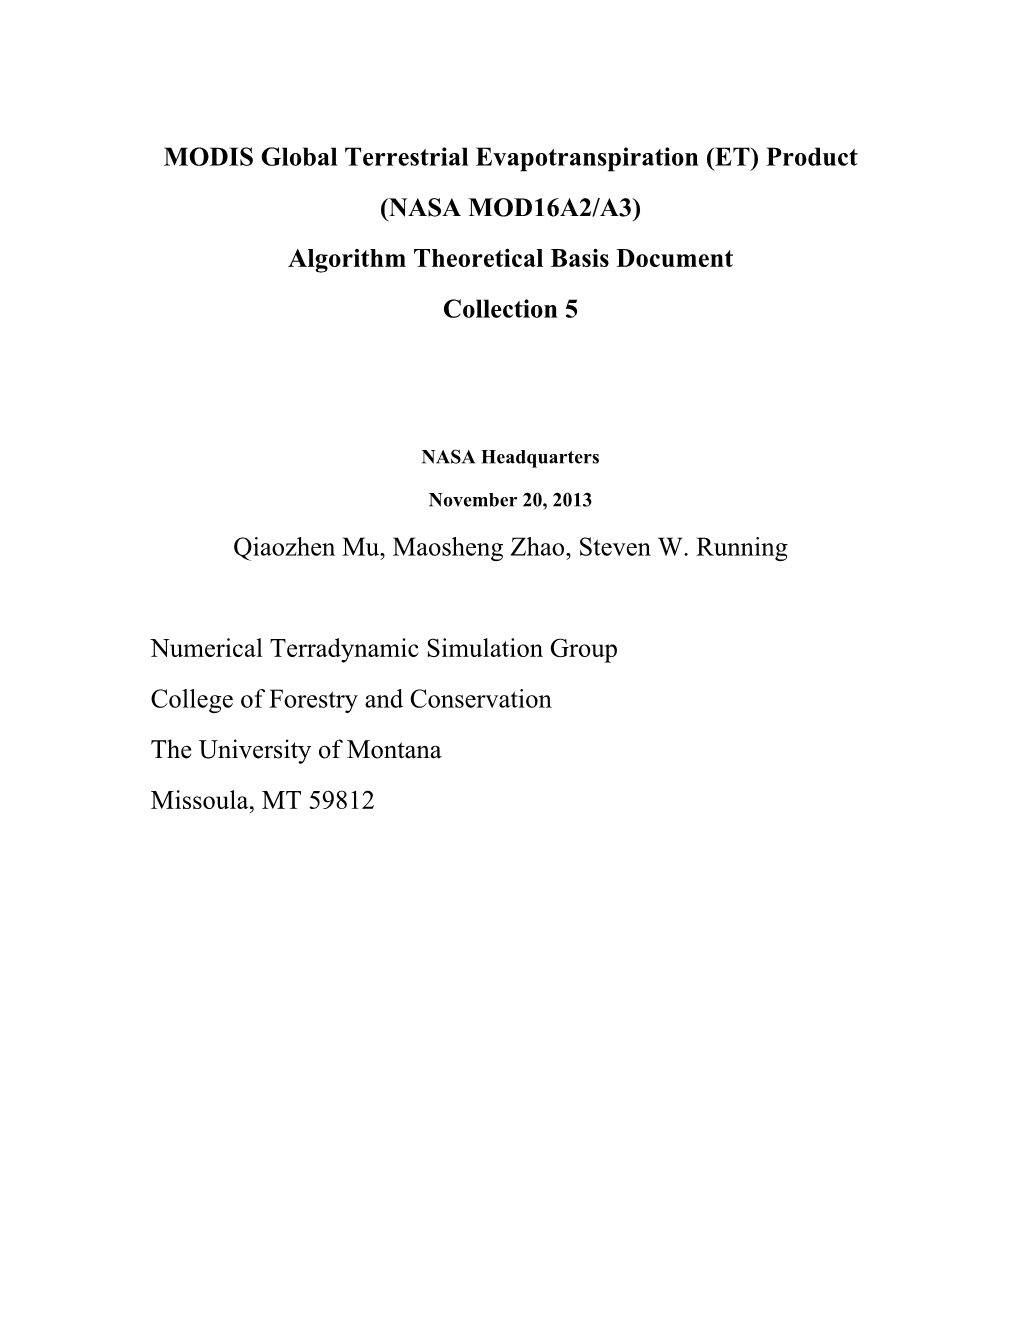 (ET) Product (NASA MOD16A2/A3) Algorithm Theoretical Basis Document Collection 5